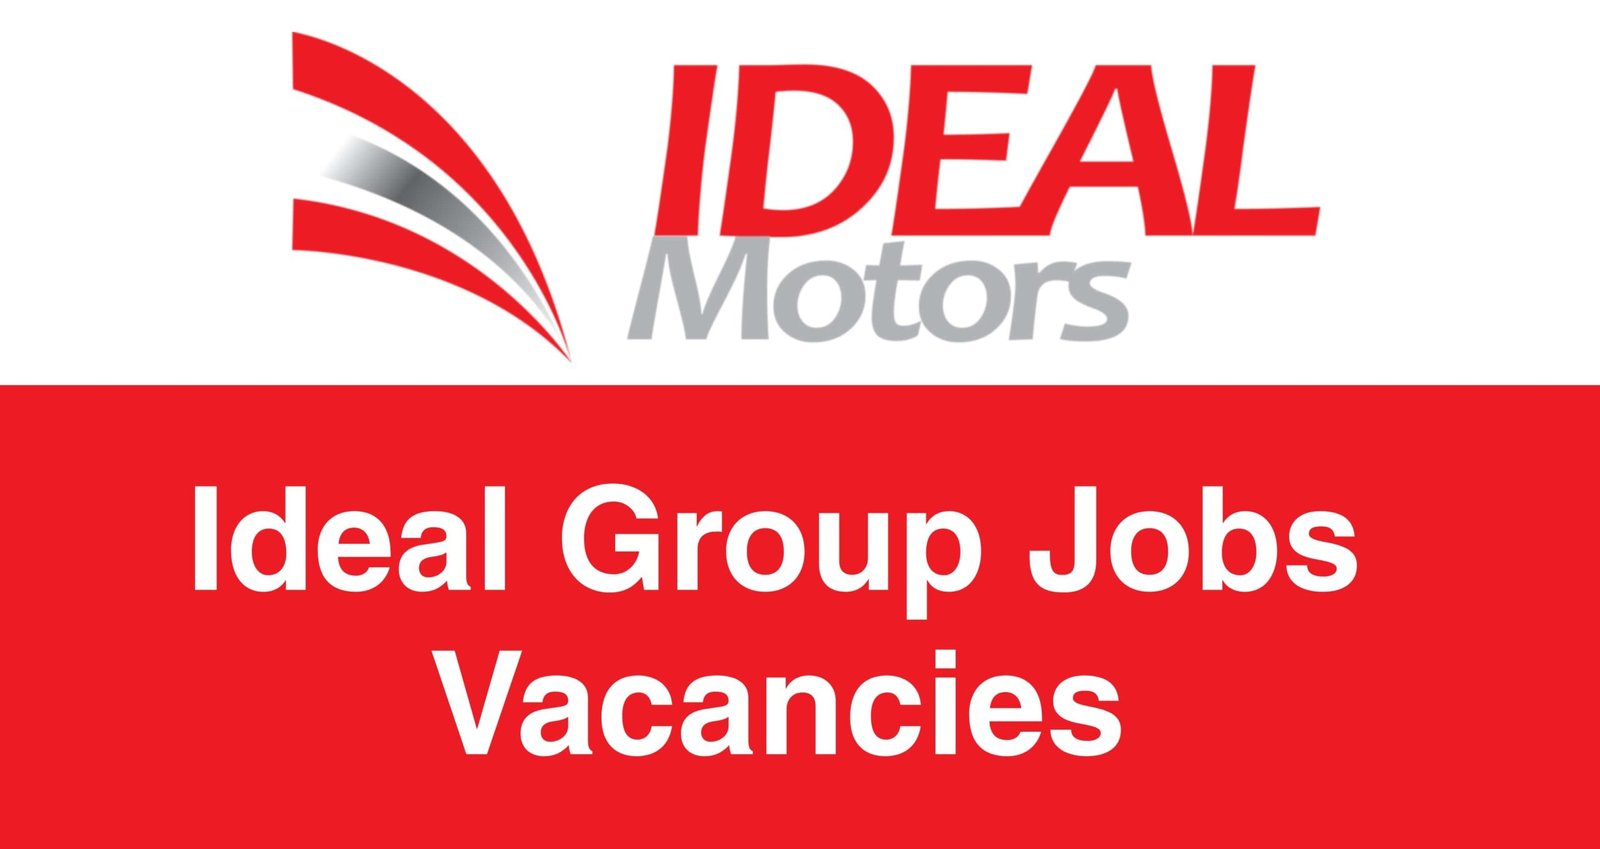 Ideal Group Jobs Vacancies